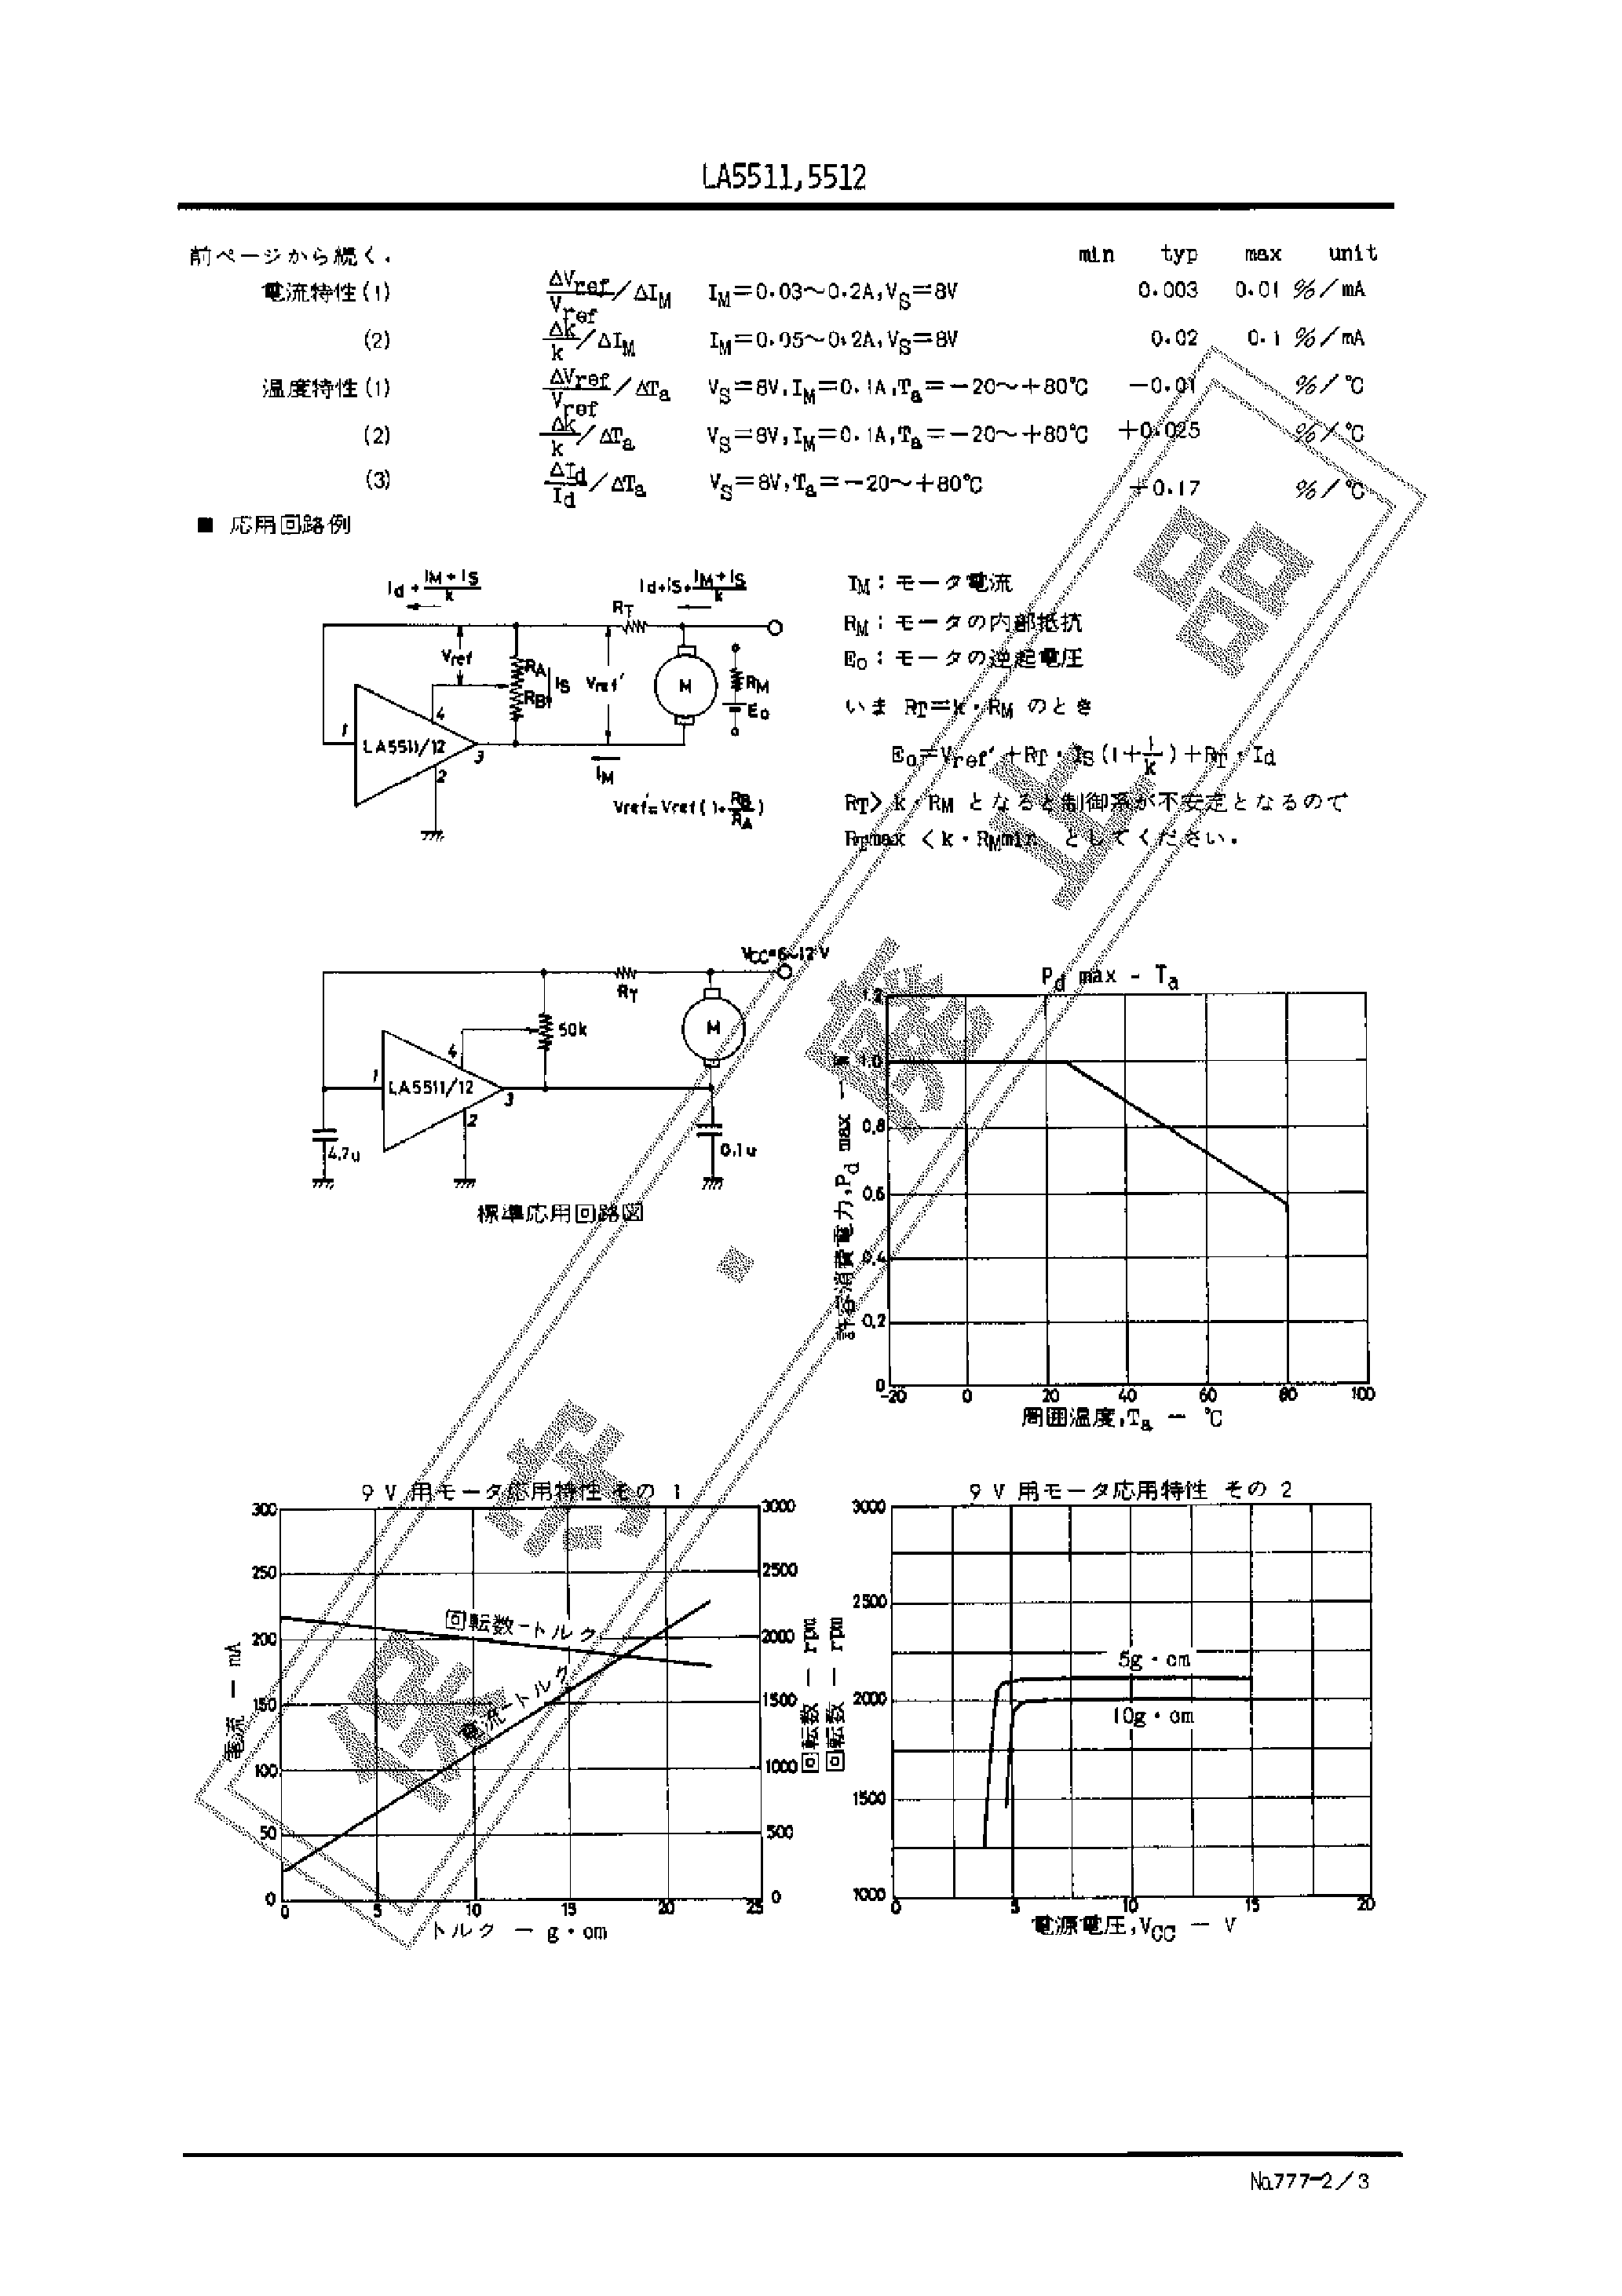 Datasheet LA5511 - (LA5511 / LA5512) DC Motor Controller page 2